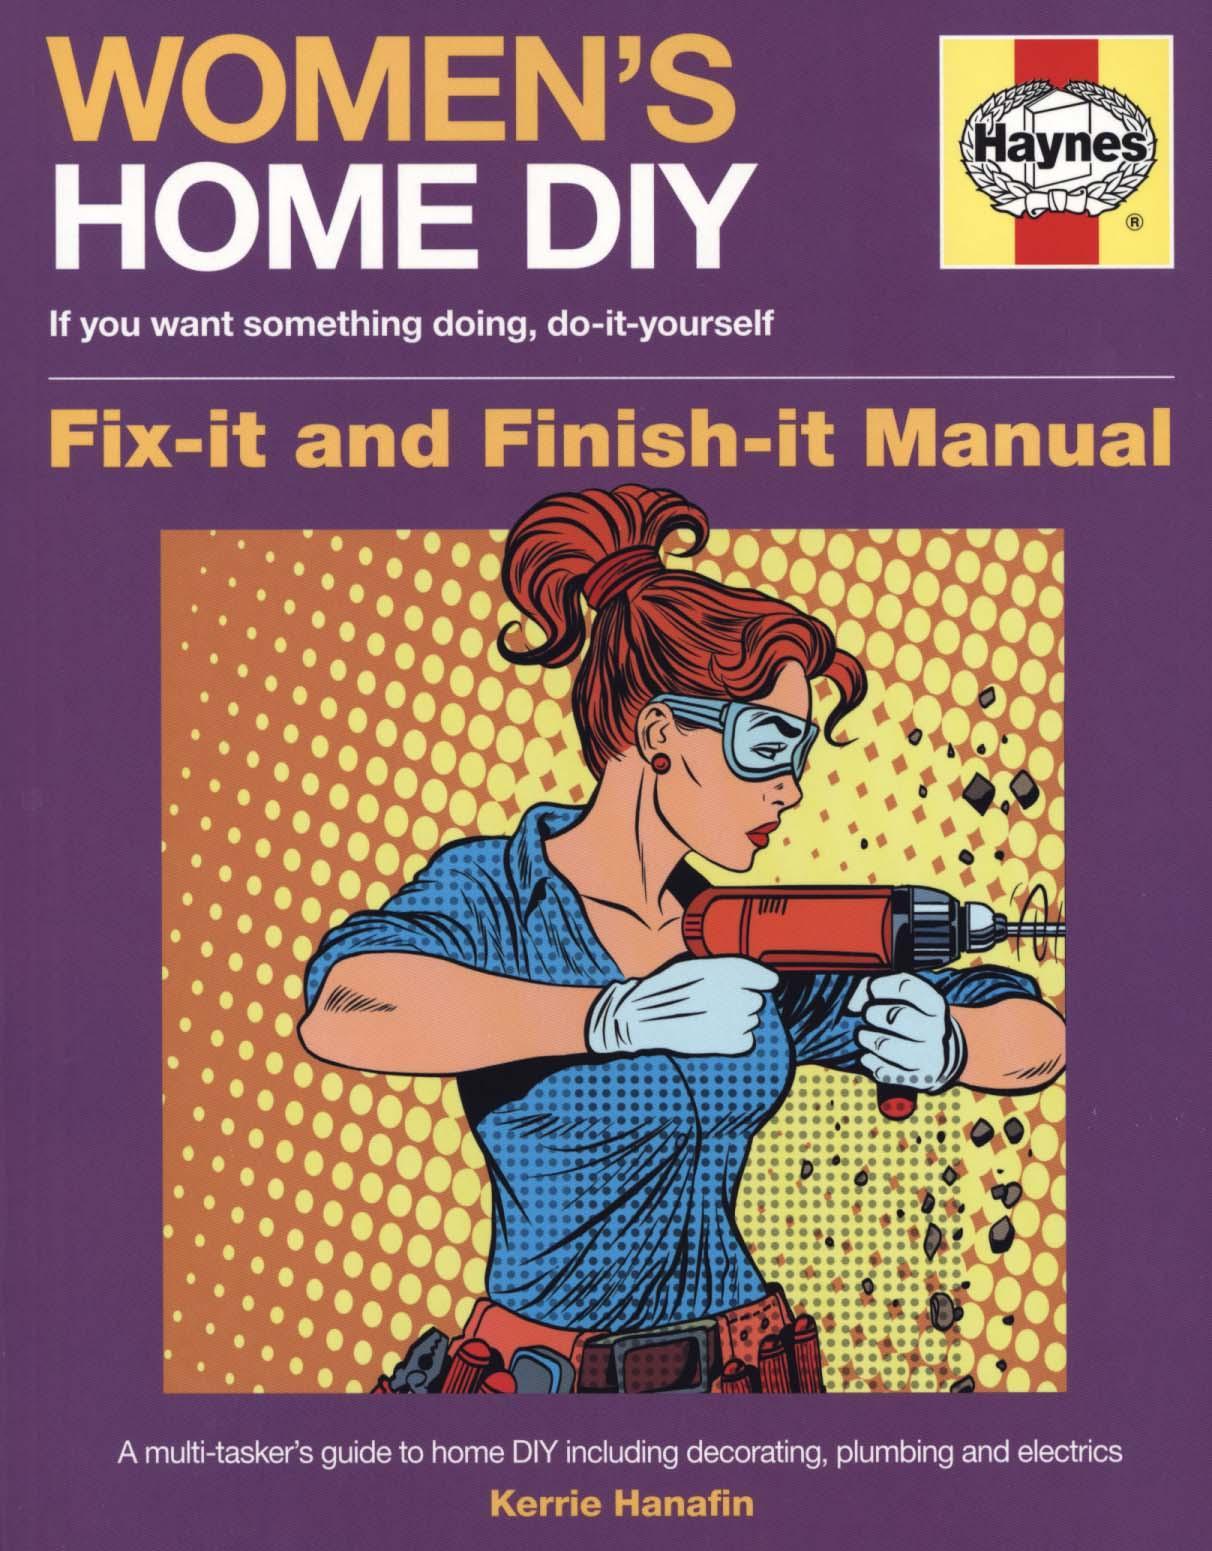 Women's Home DIY Manual - Kerrie Hanfin